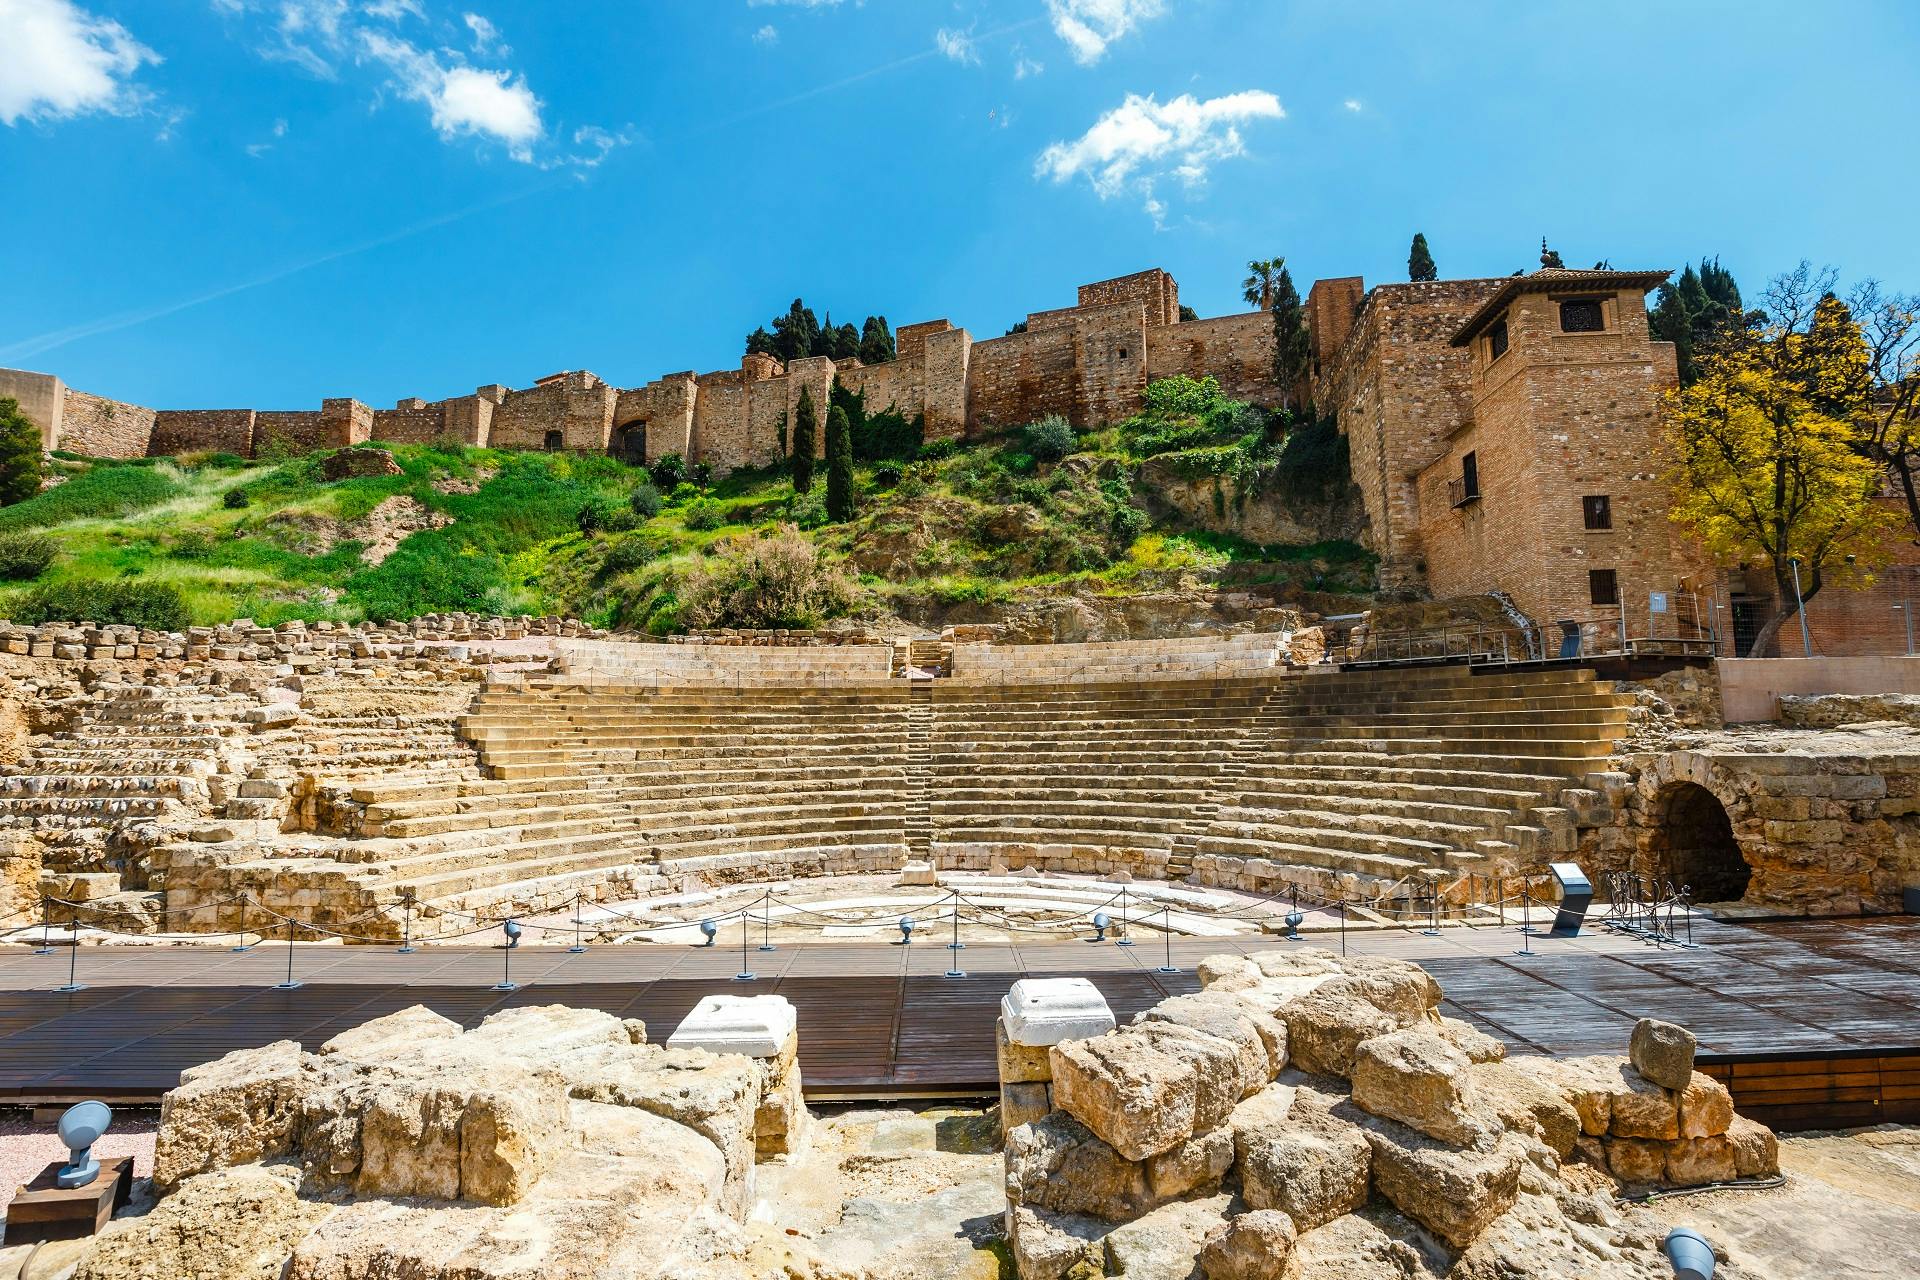 Théâtre romain de Malaga